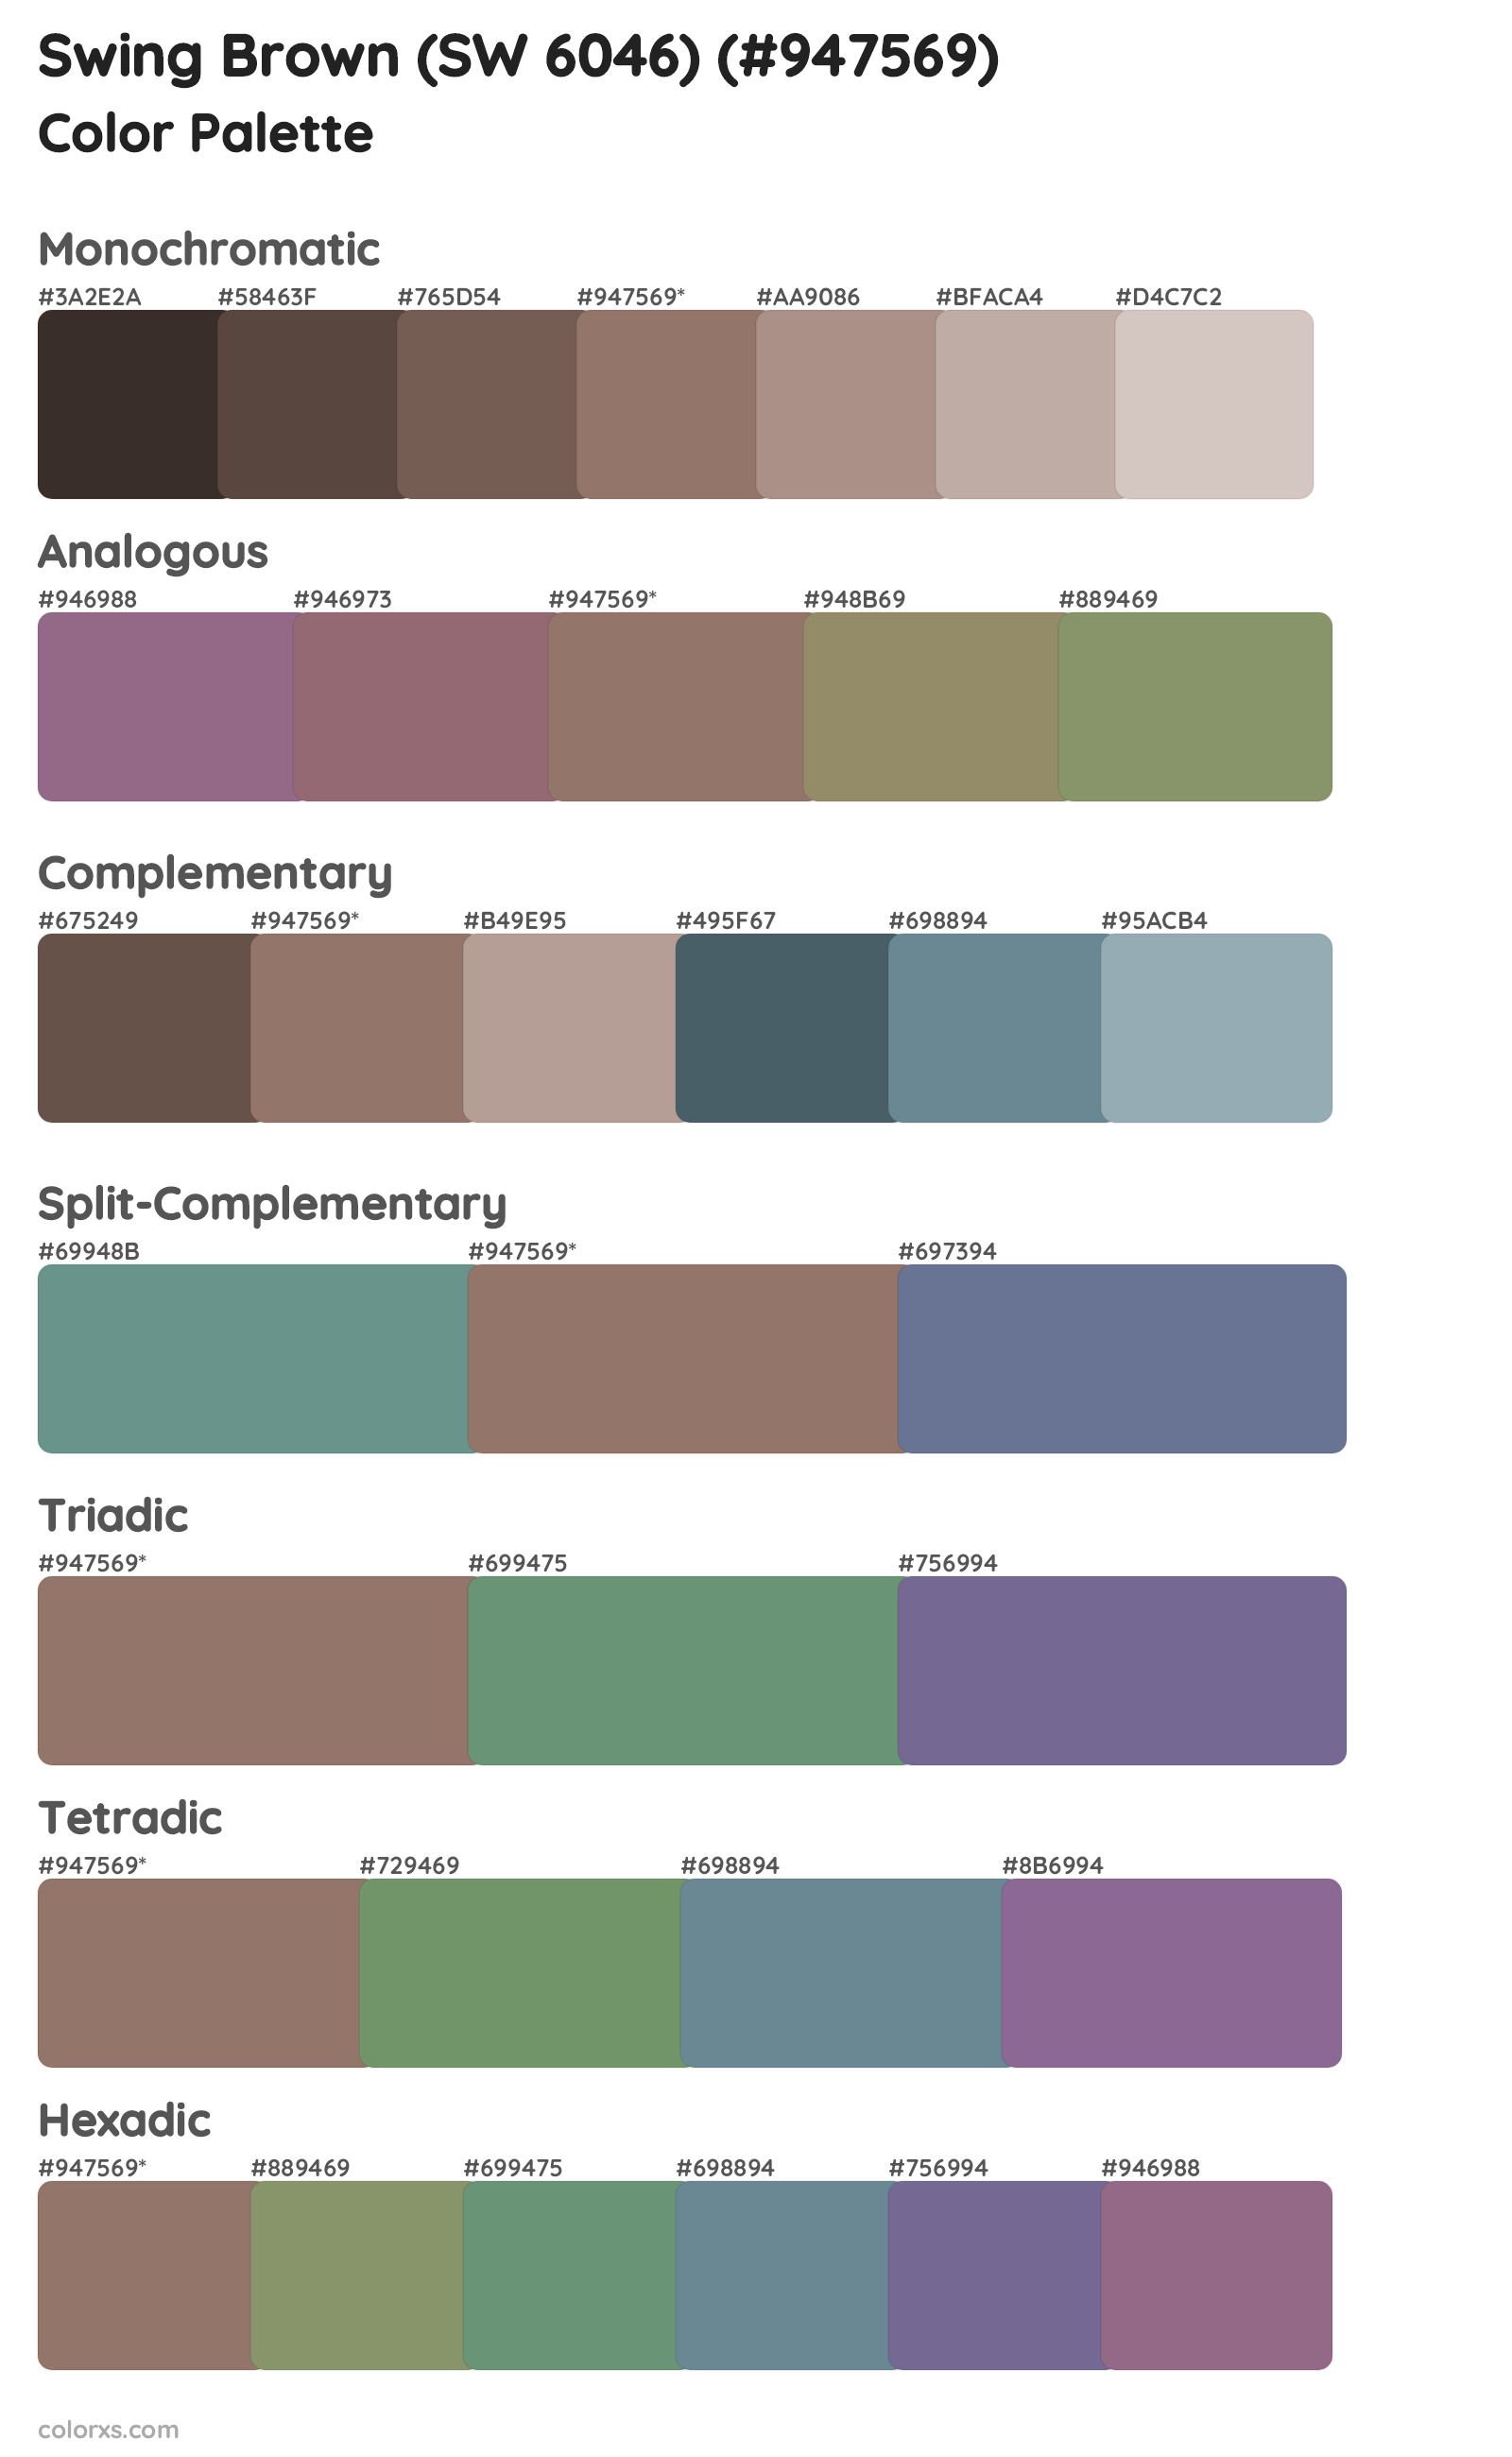 Swing Brown (SW 6046) Color Scheme Palettes